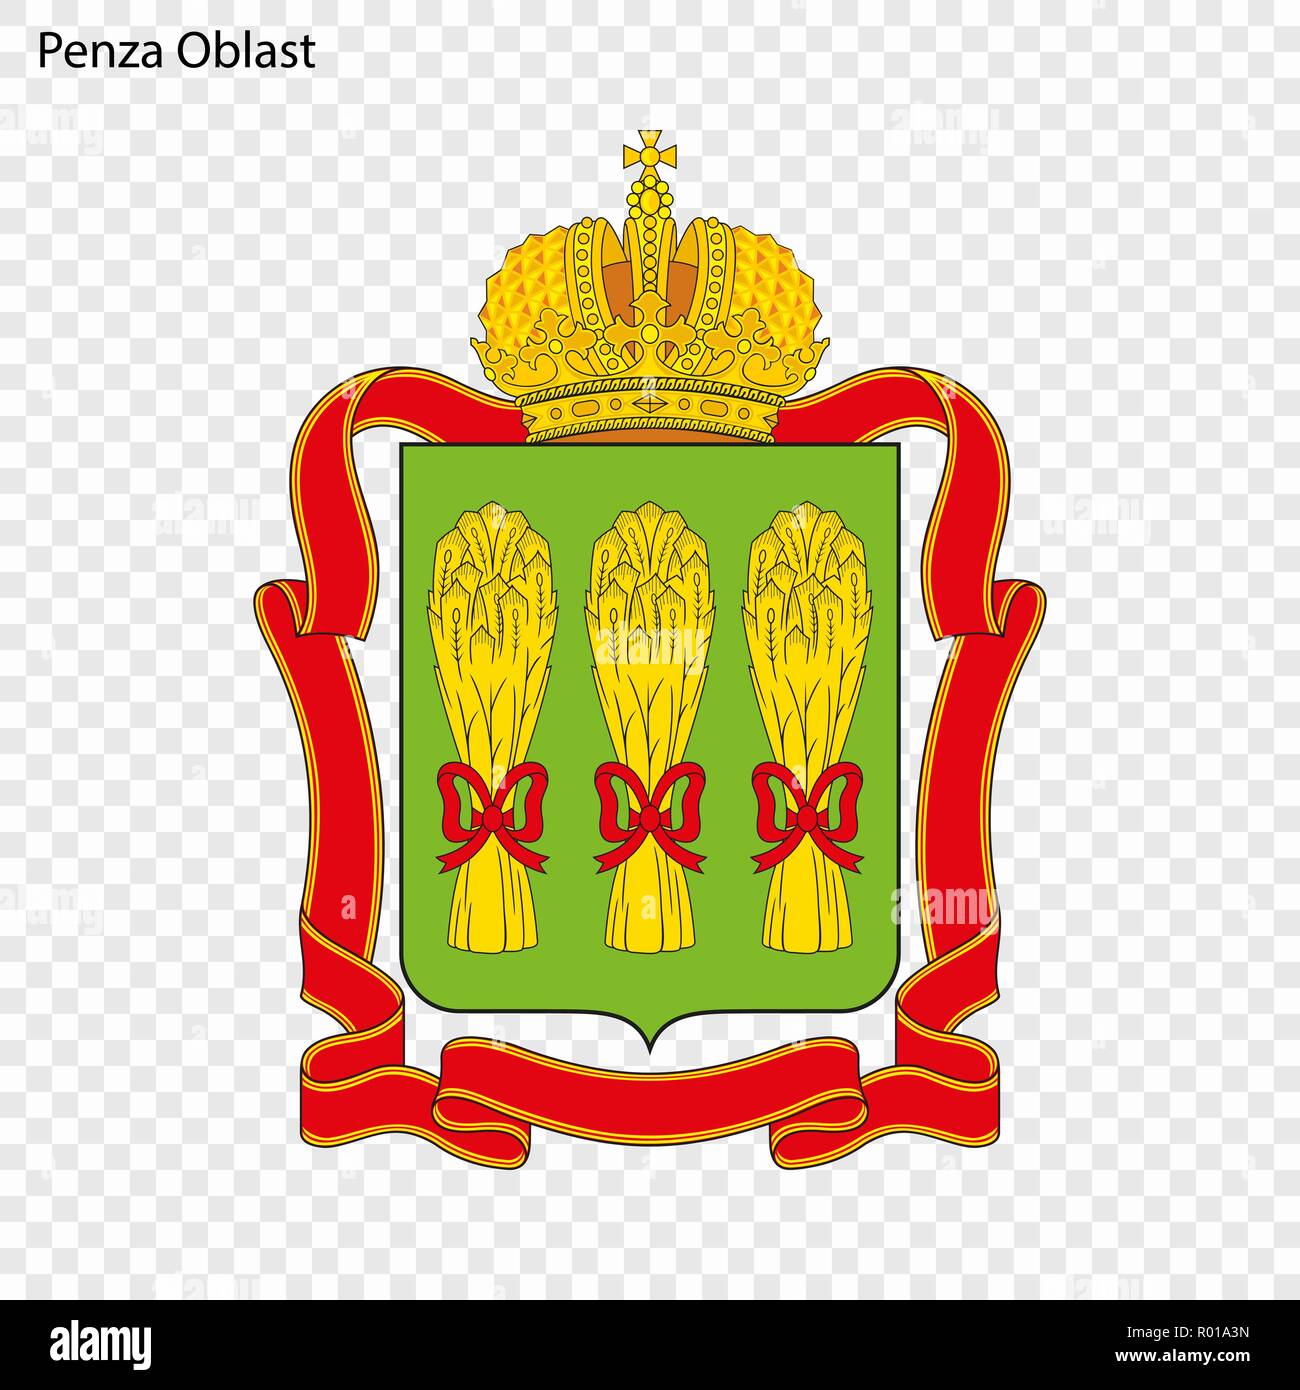 Emblem of Penza Oblast, province of Russia Stock Vector